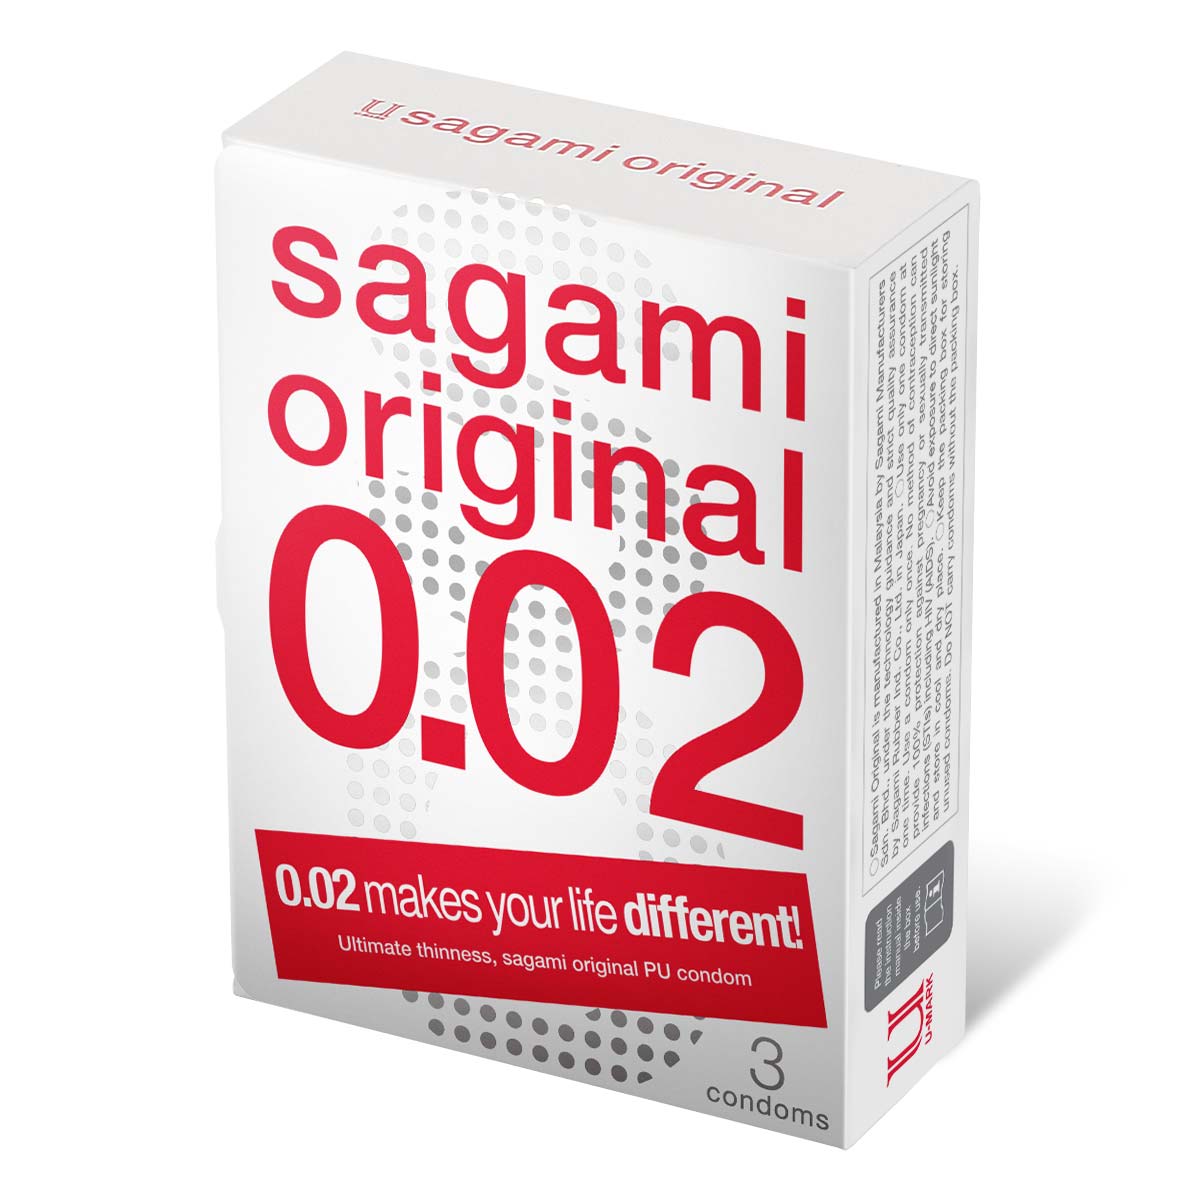 Sagami Original 0.02 (2nd generation) 3's Pack PU Condom (UK)-p_1